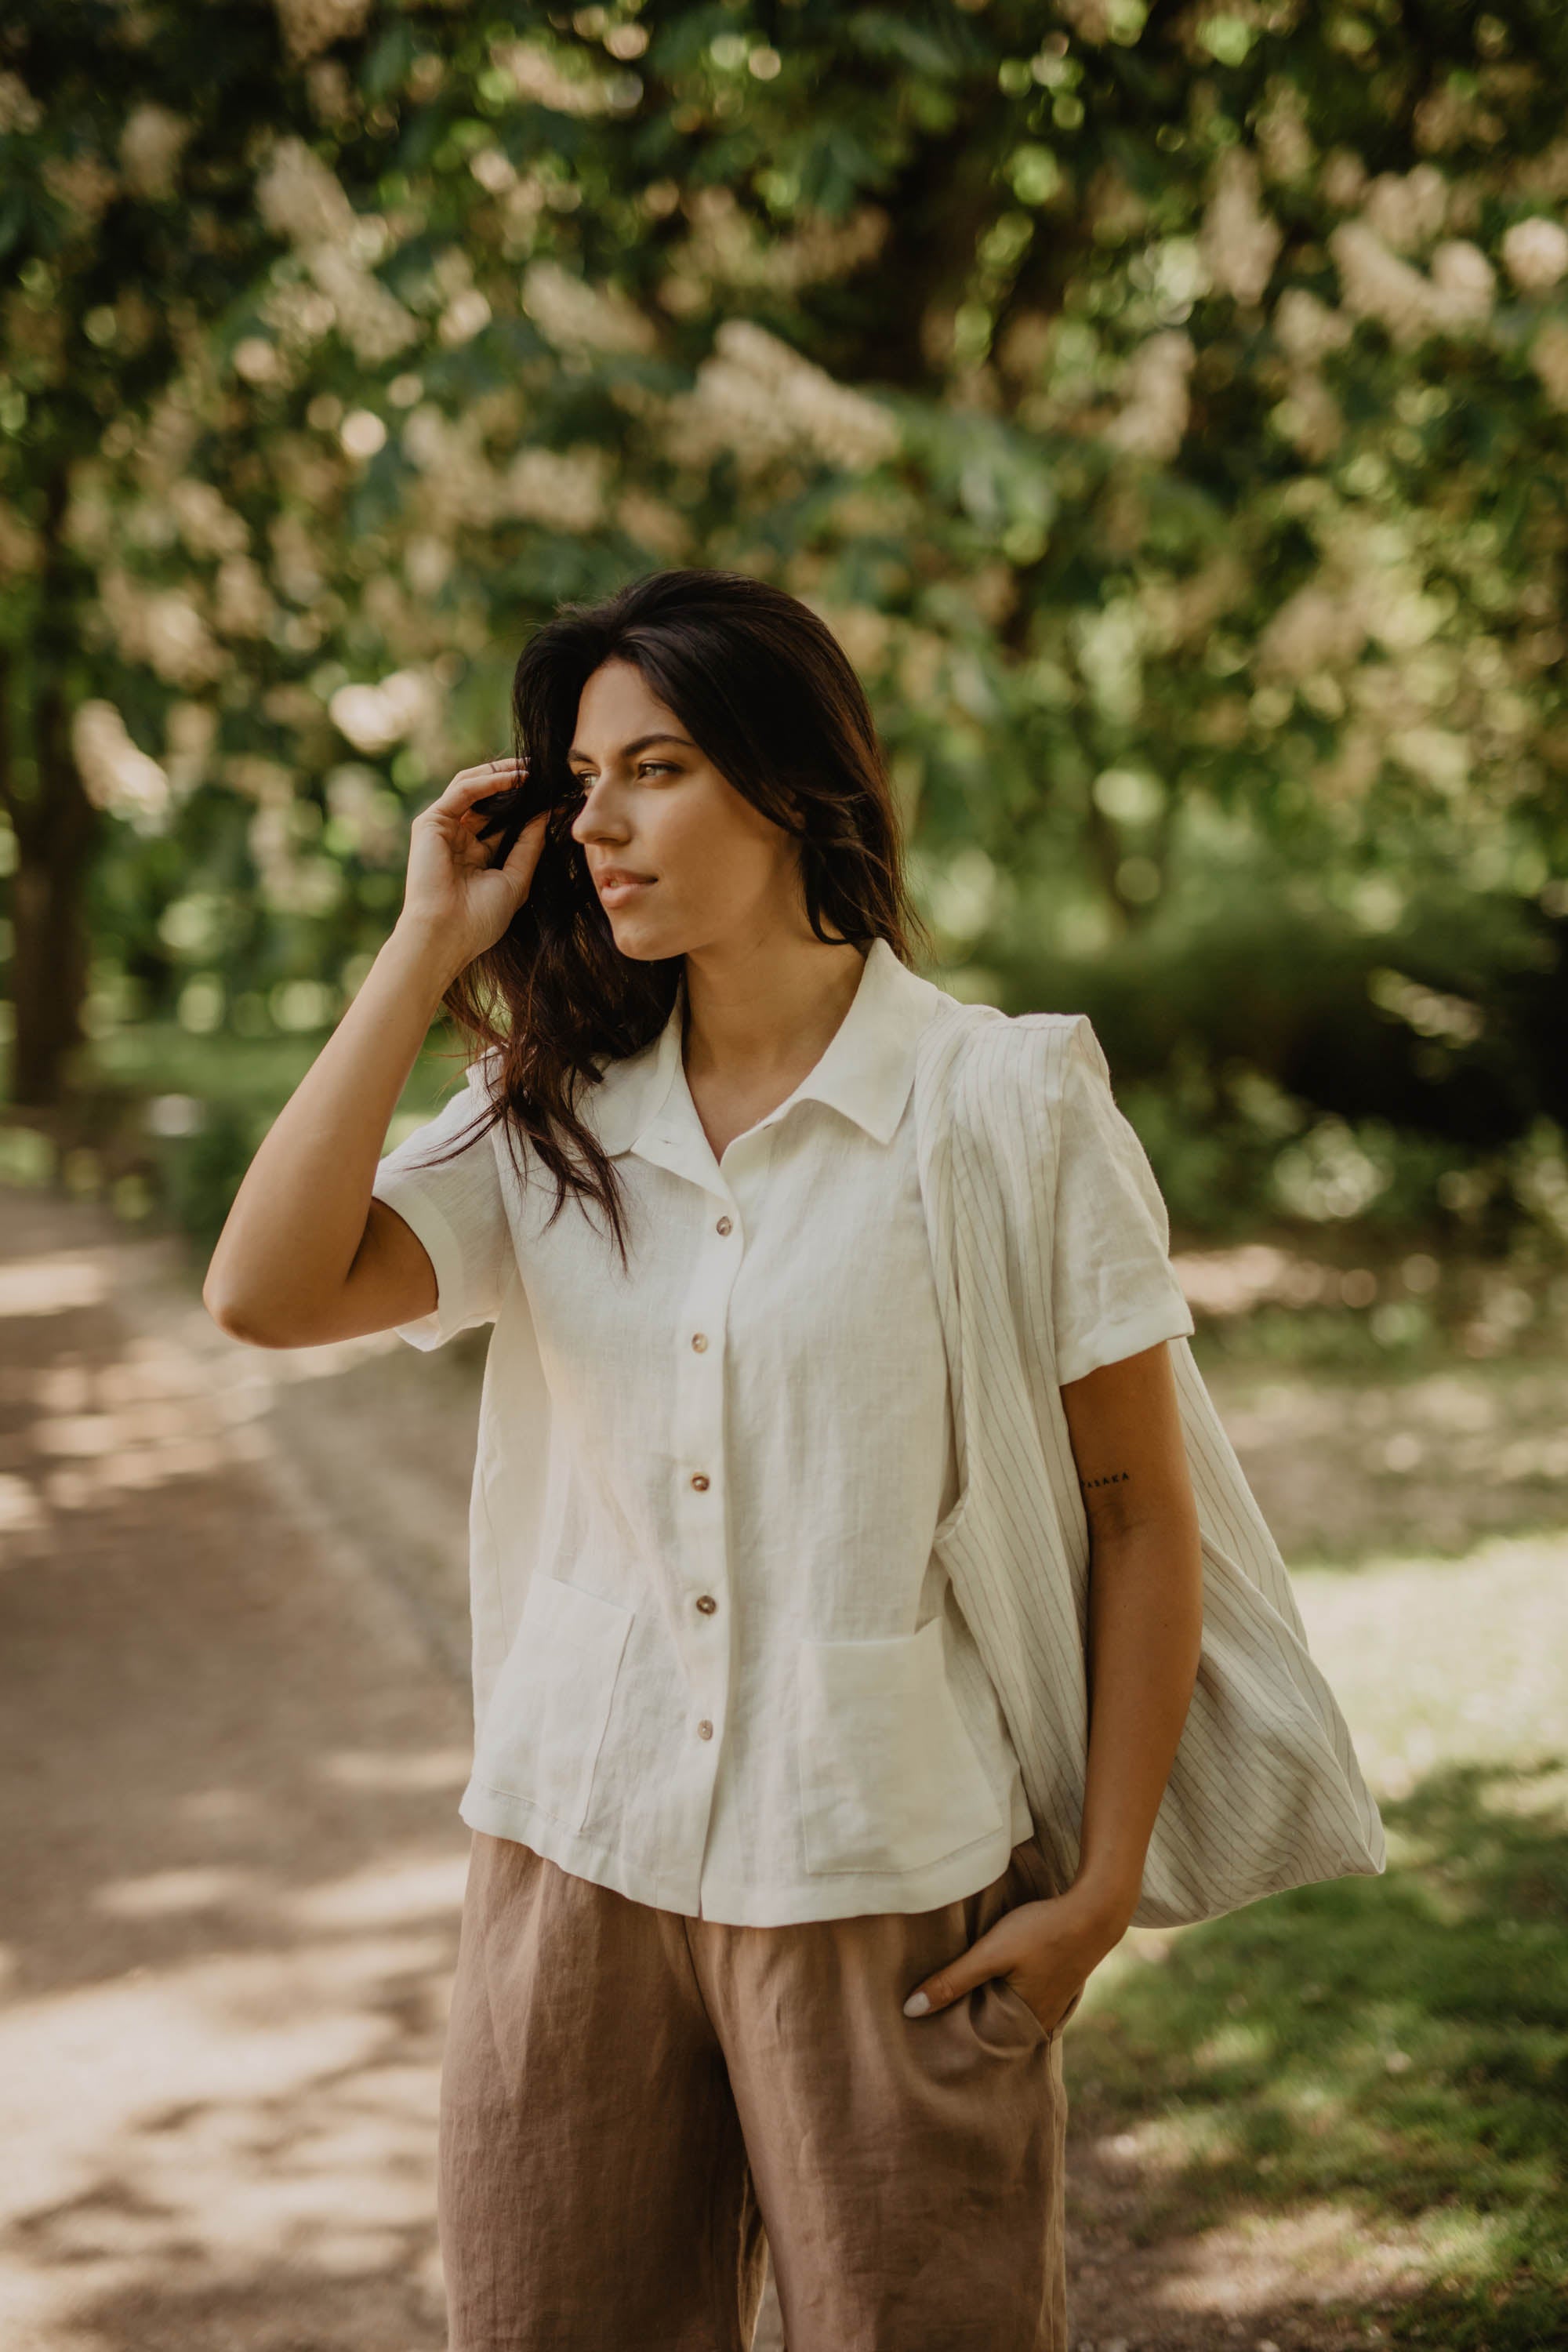 Woman Wearing A White Linen Summer Shirt And Linen Shorts in A Park